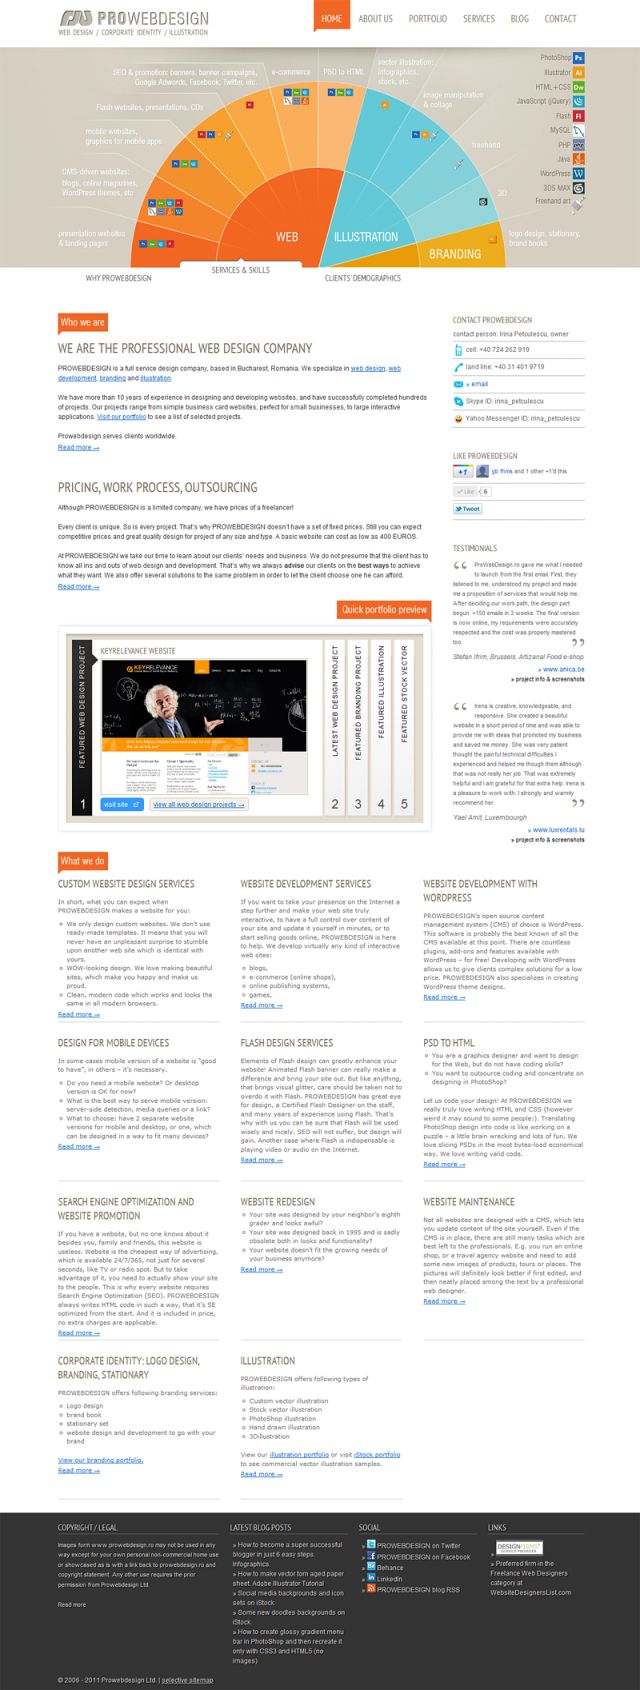 Prowebdesign screenshot